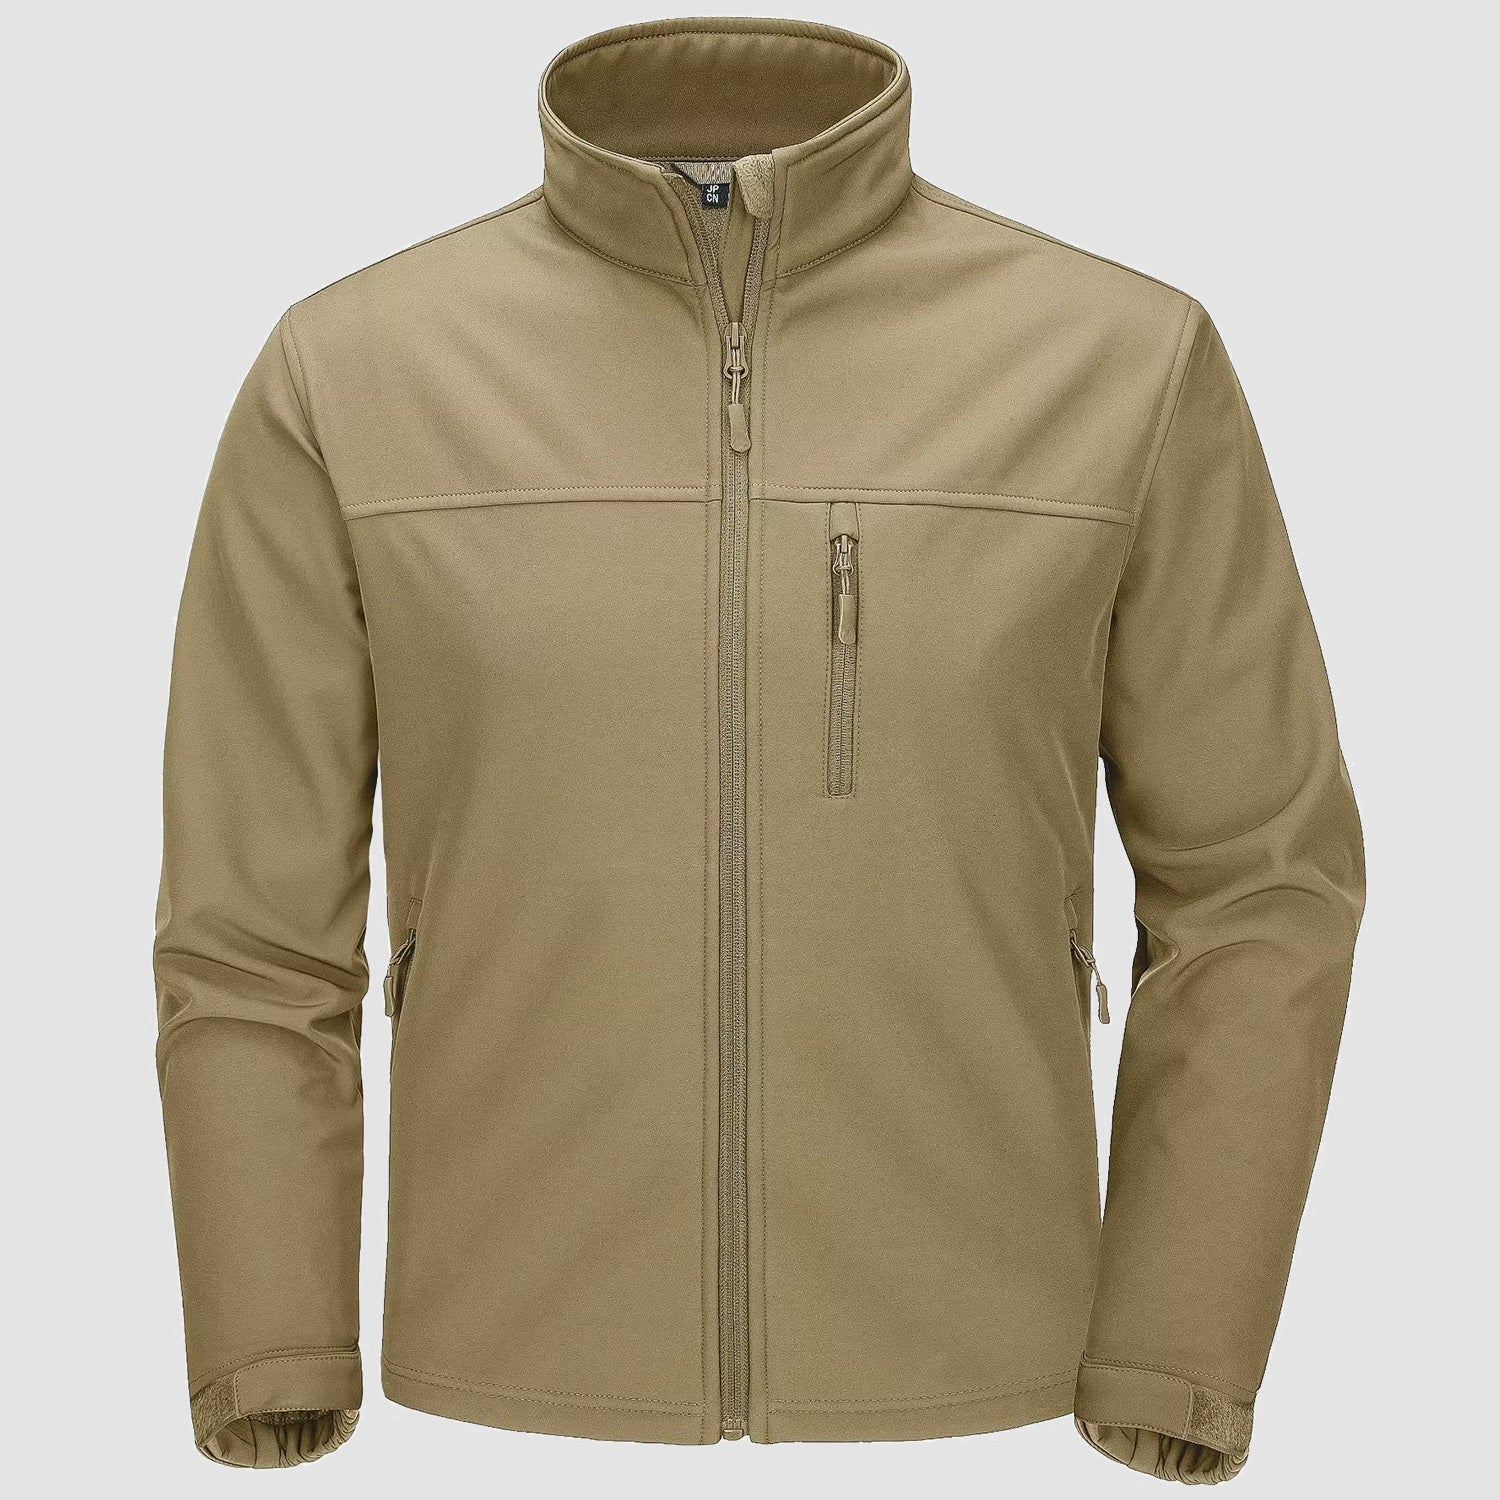 Men's Fleece Lined Jacket Lightweight Waterproof Jacket